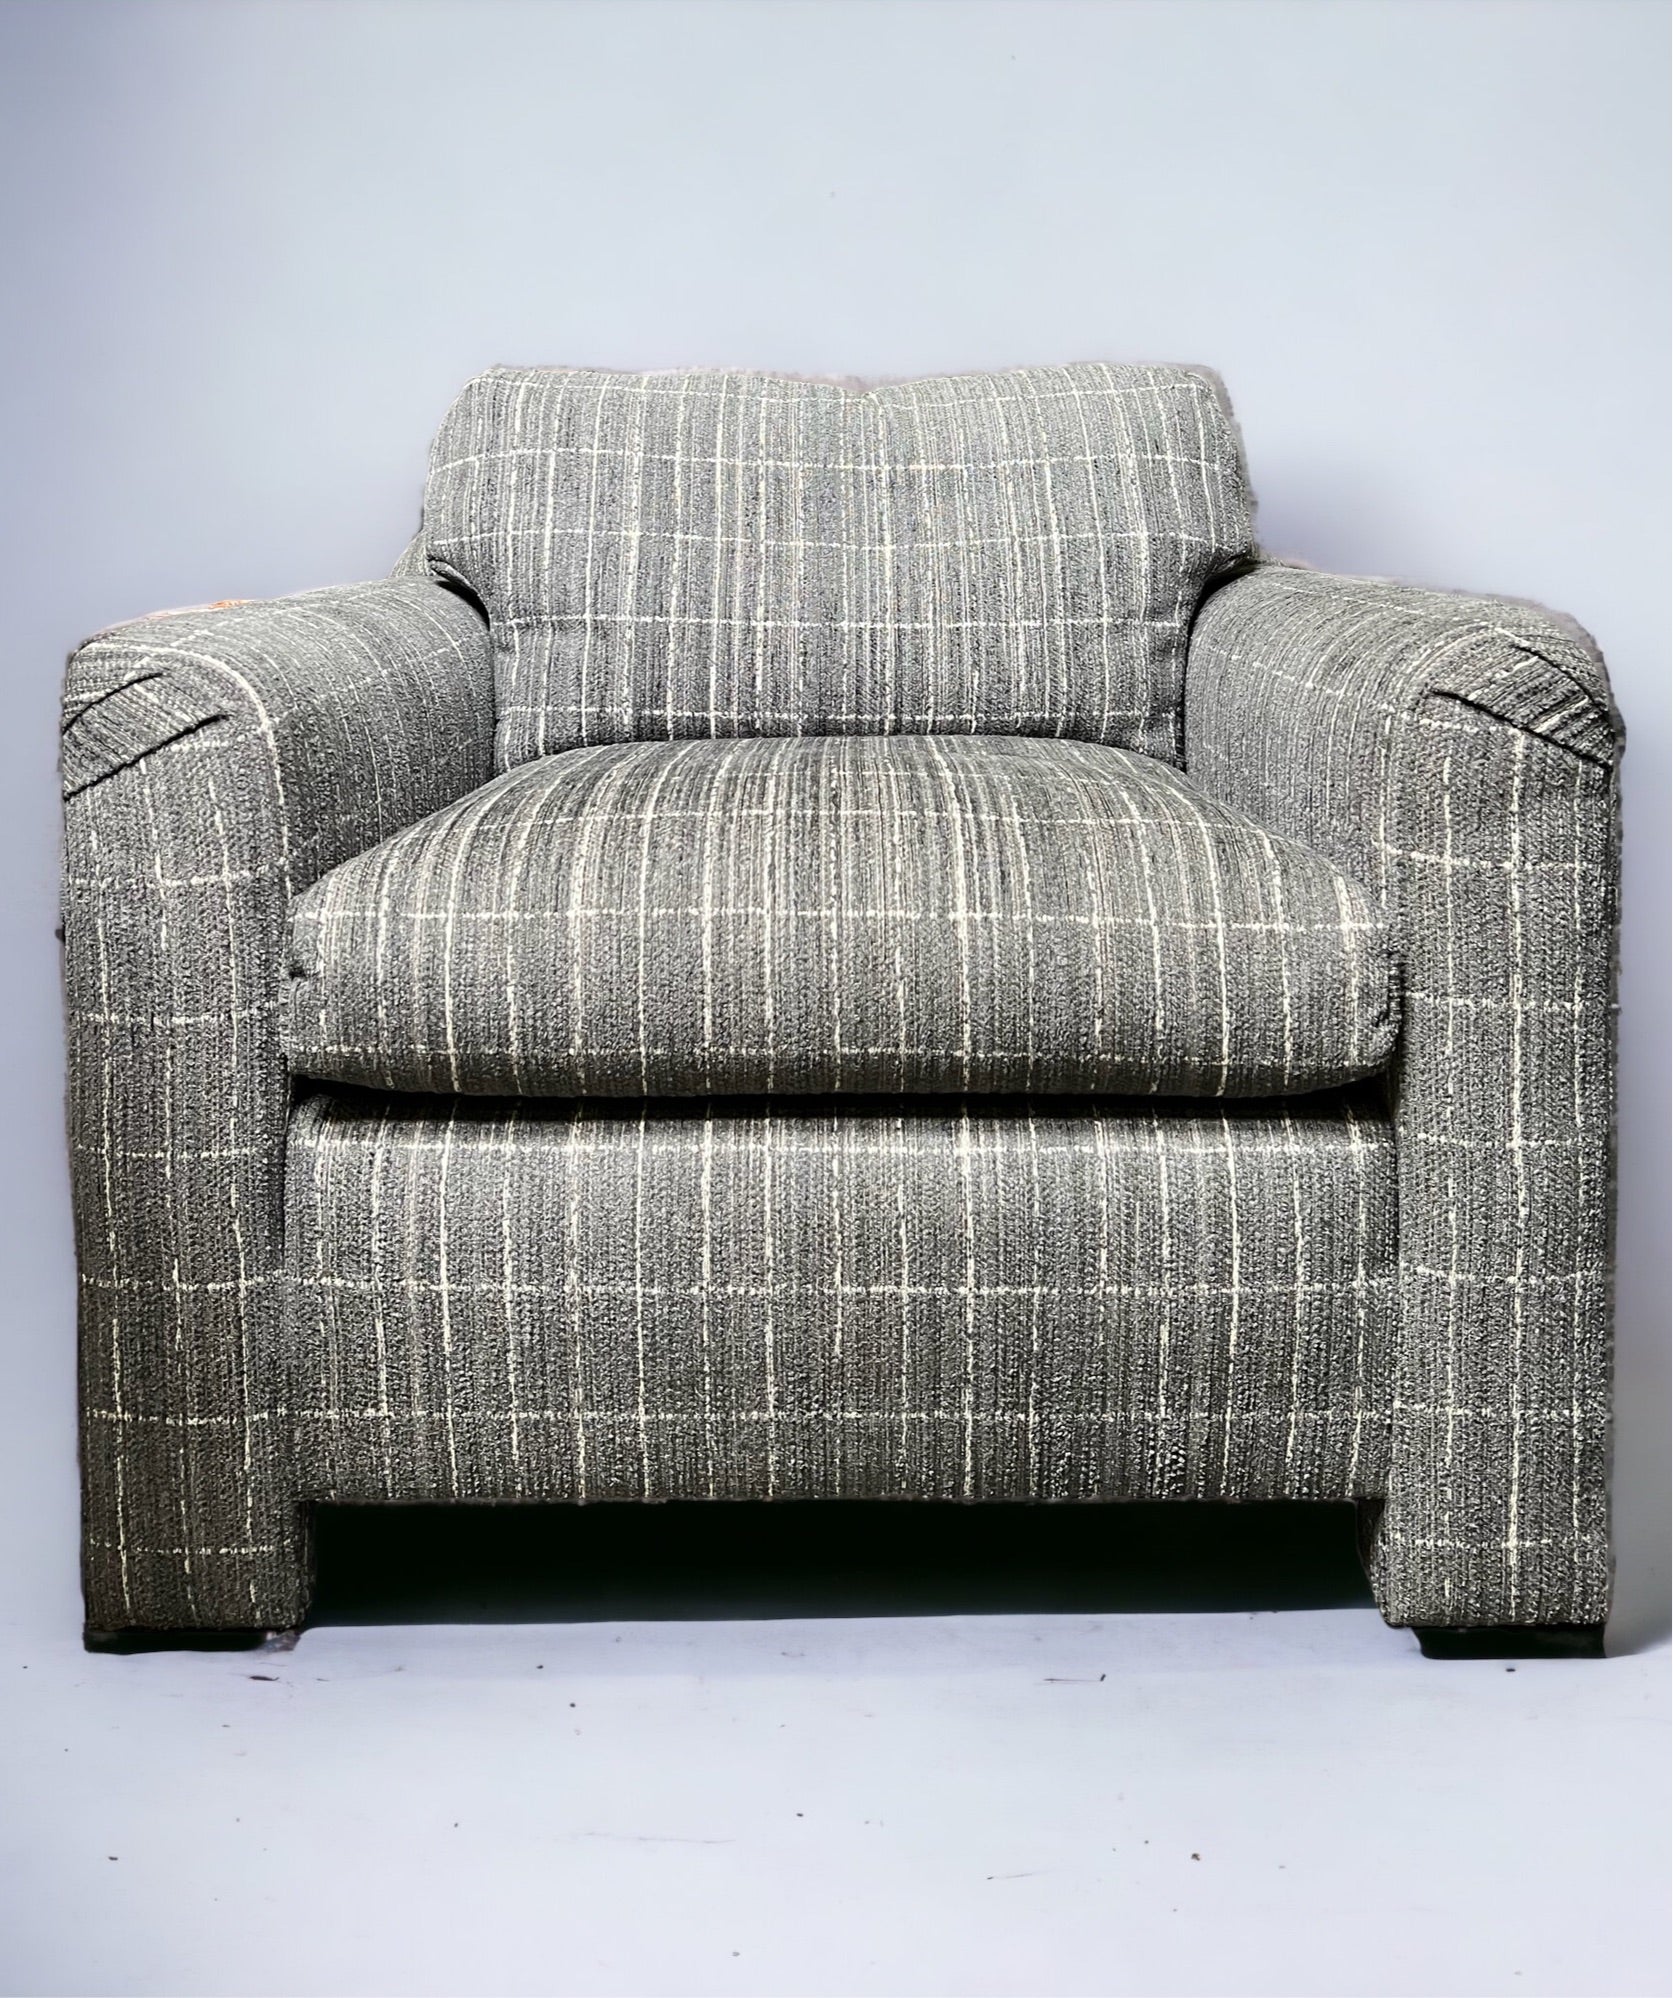 Grey Cube Ralph Lauren Reupholstered Chairs (Pair)